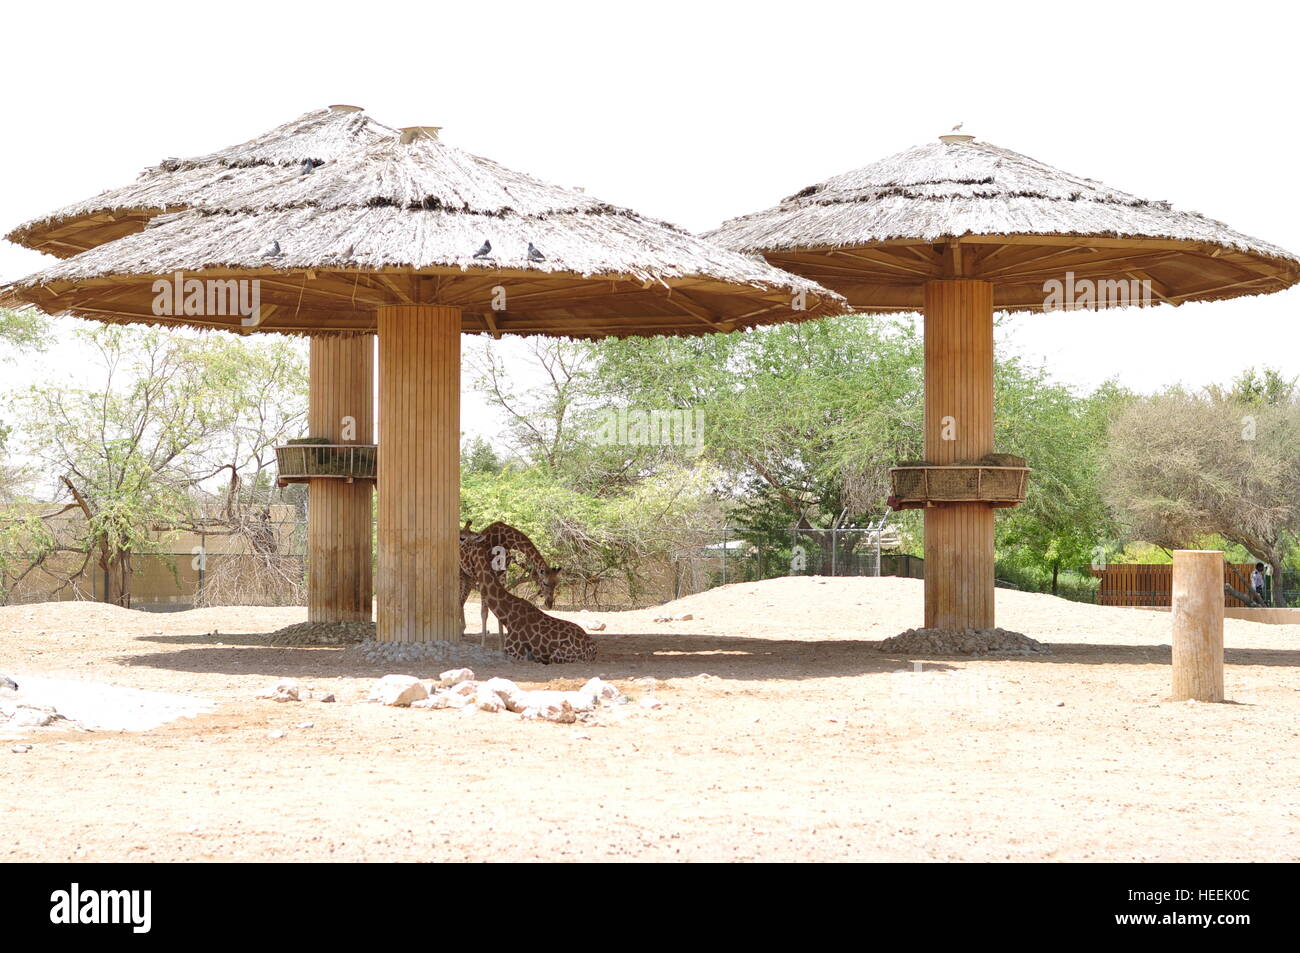 Ain Ain Zoo und Wildtiere Vögel Reptilien Giraffe Schildkröten Schlangen Krokodile Löwe Stockfoto